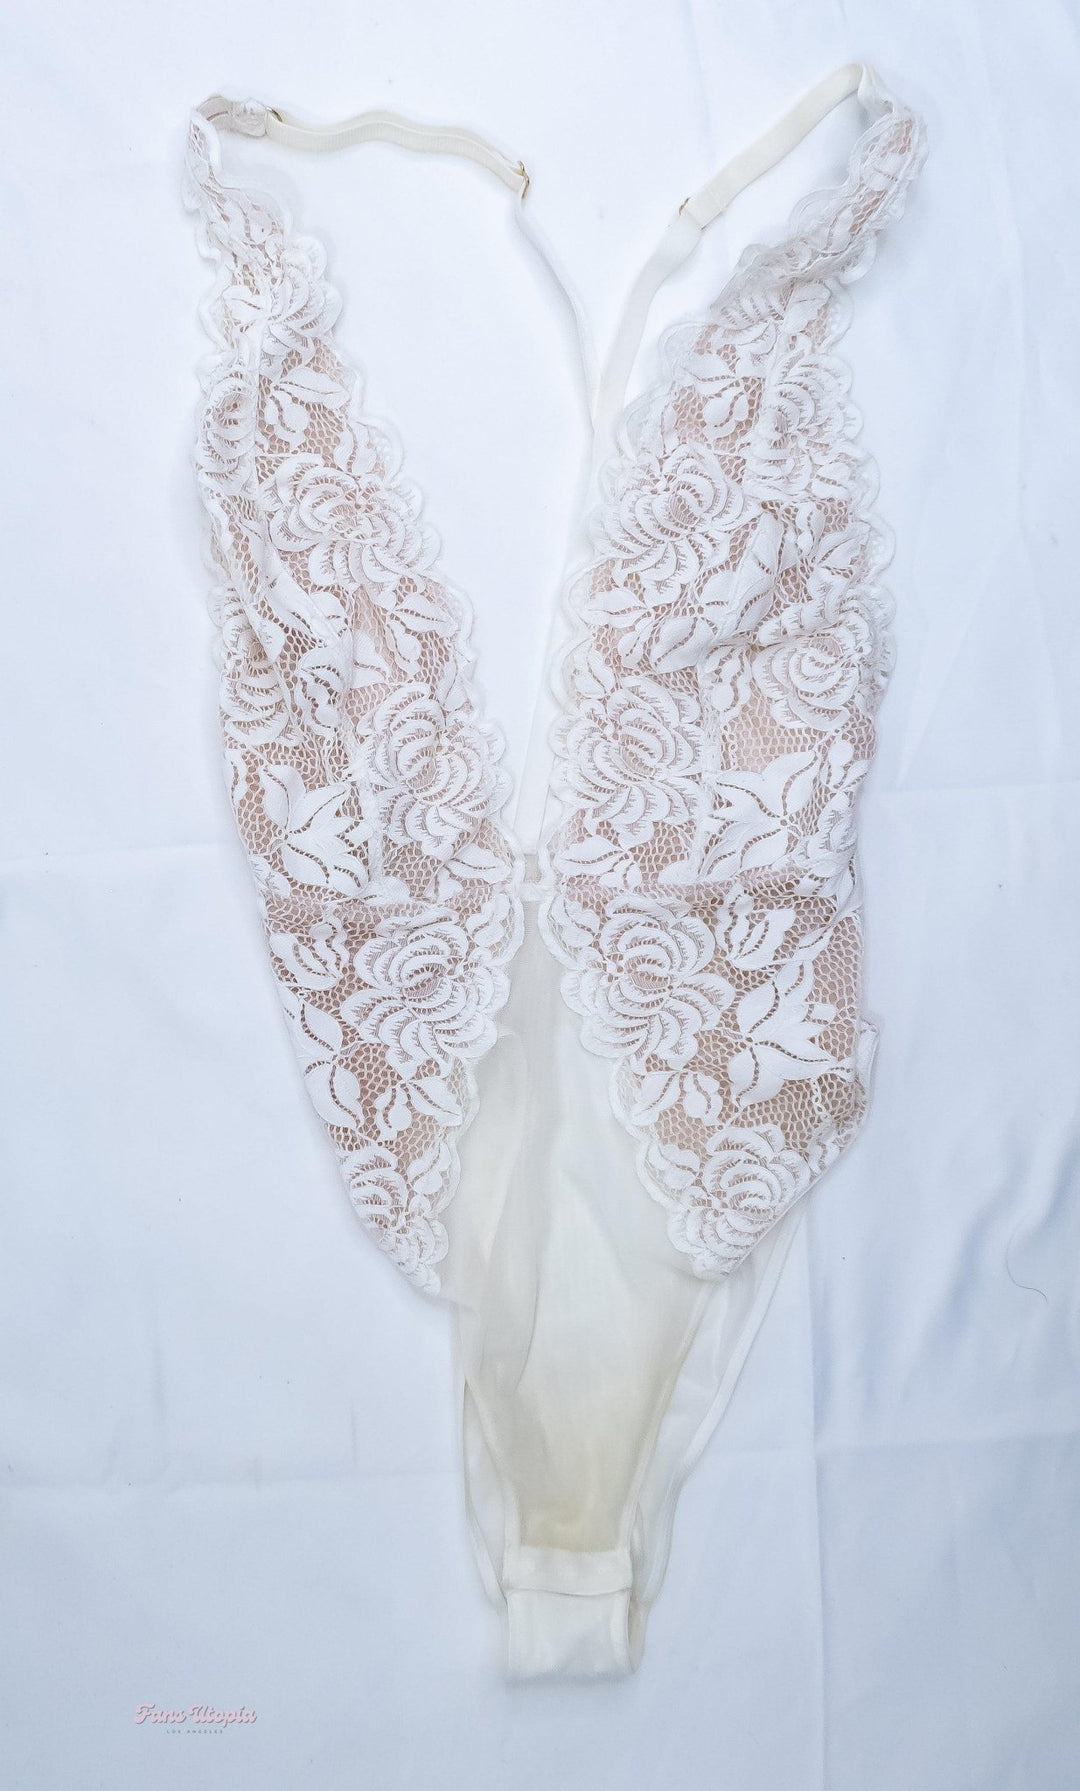 Brett Rossi White Lace Bodysuit + Signed Polaroid - FANS UTOPIA